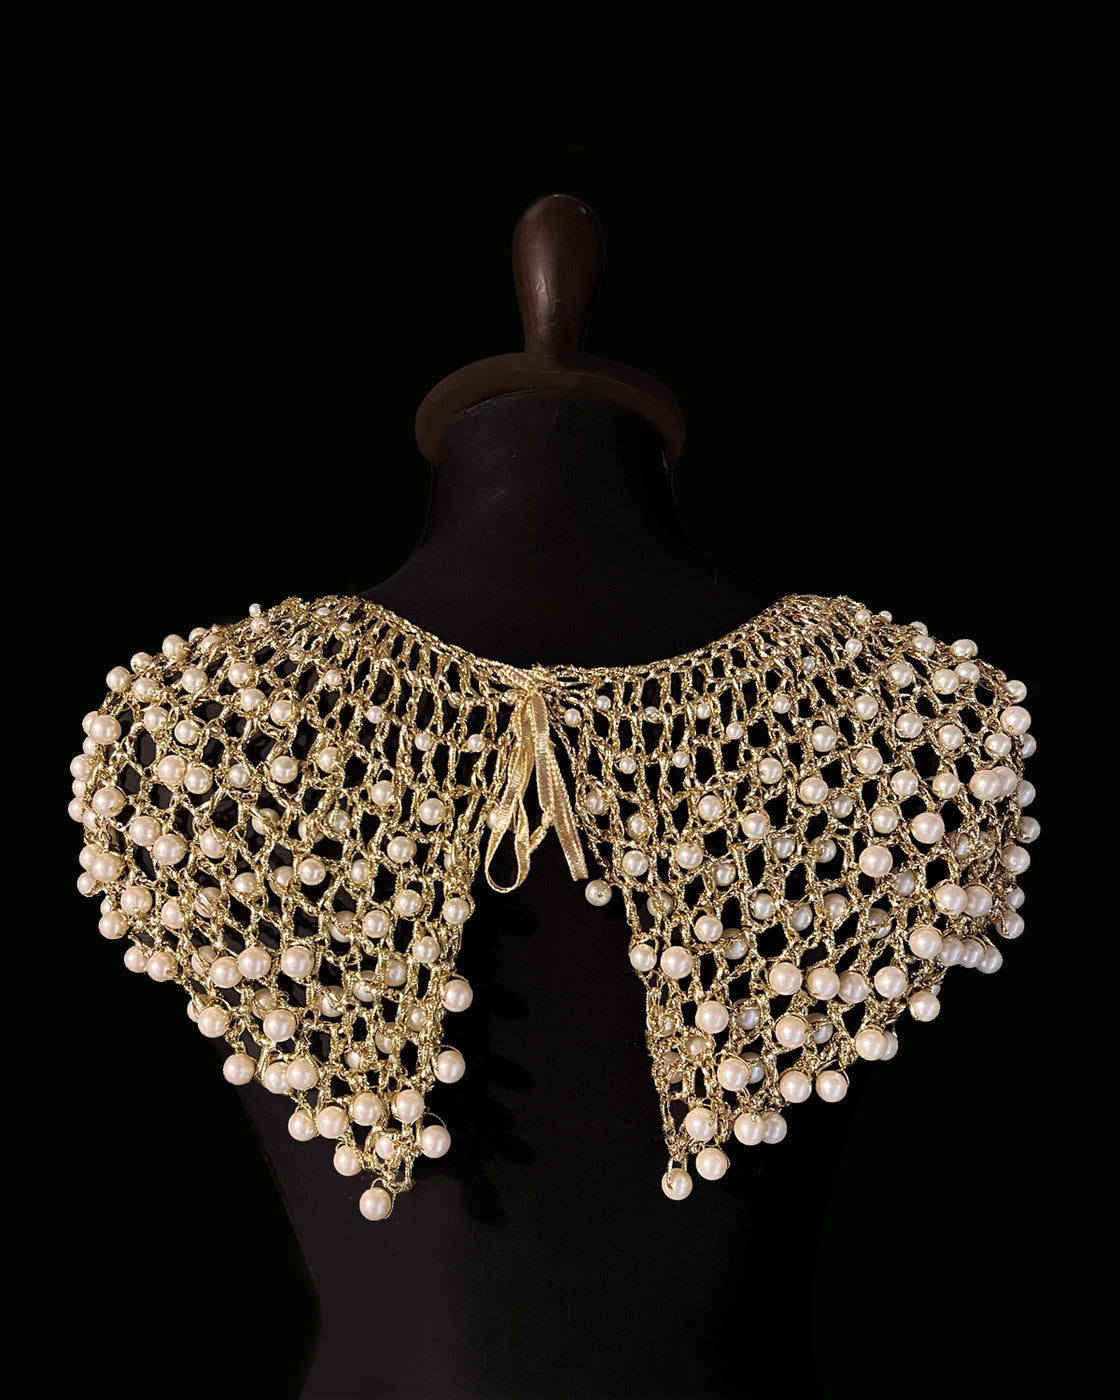 Deepika Padukone inspired Crochet Pearl Bib Necklace.